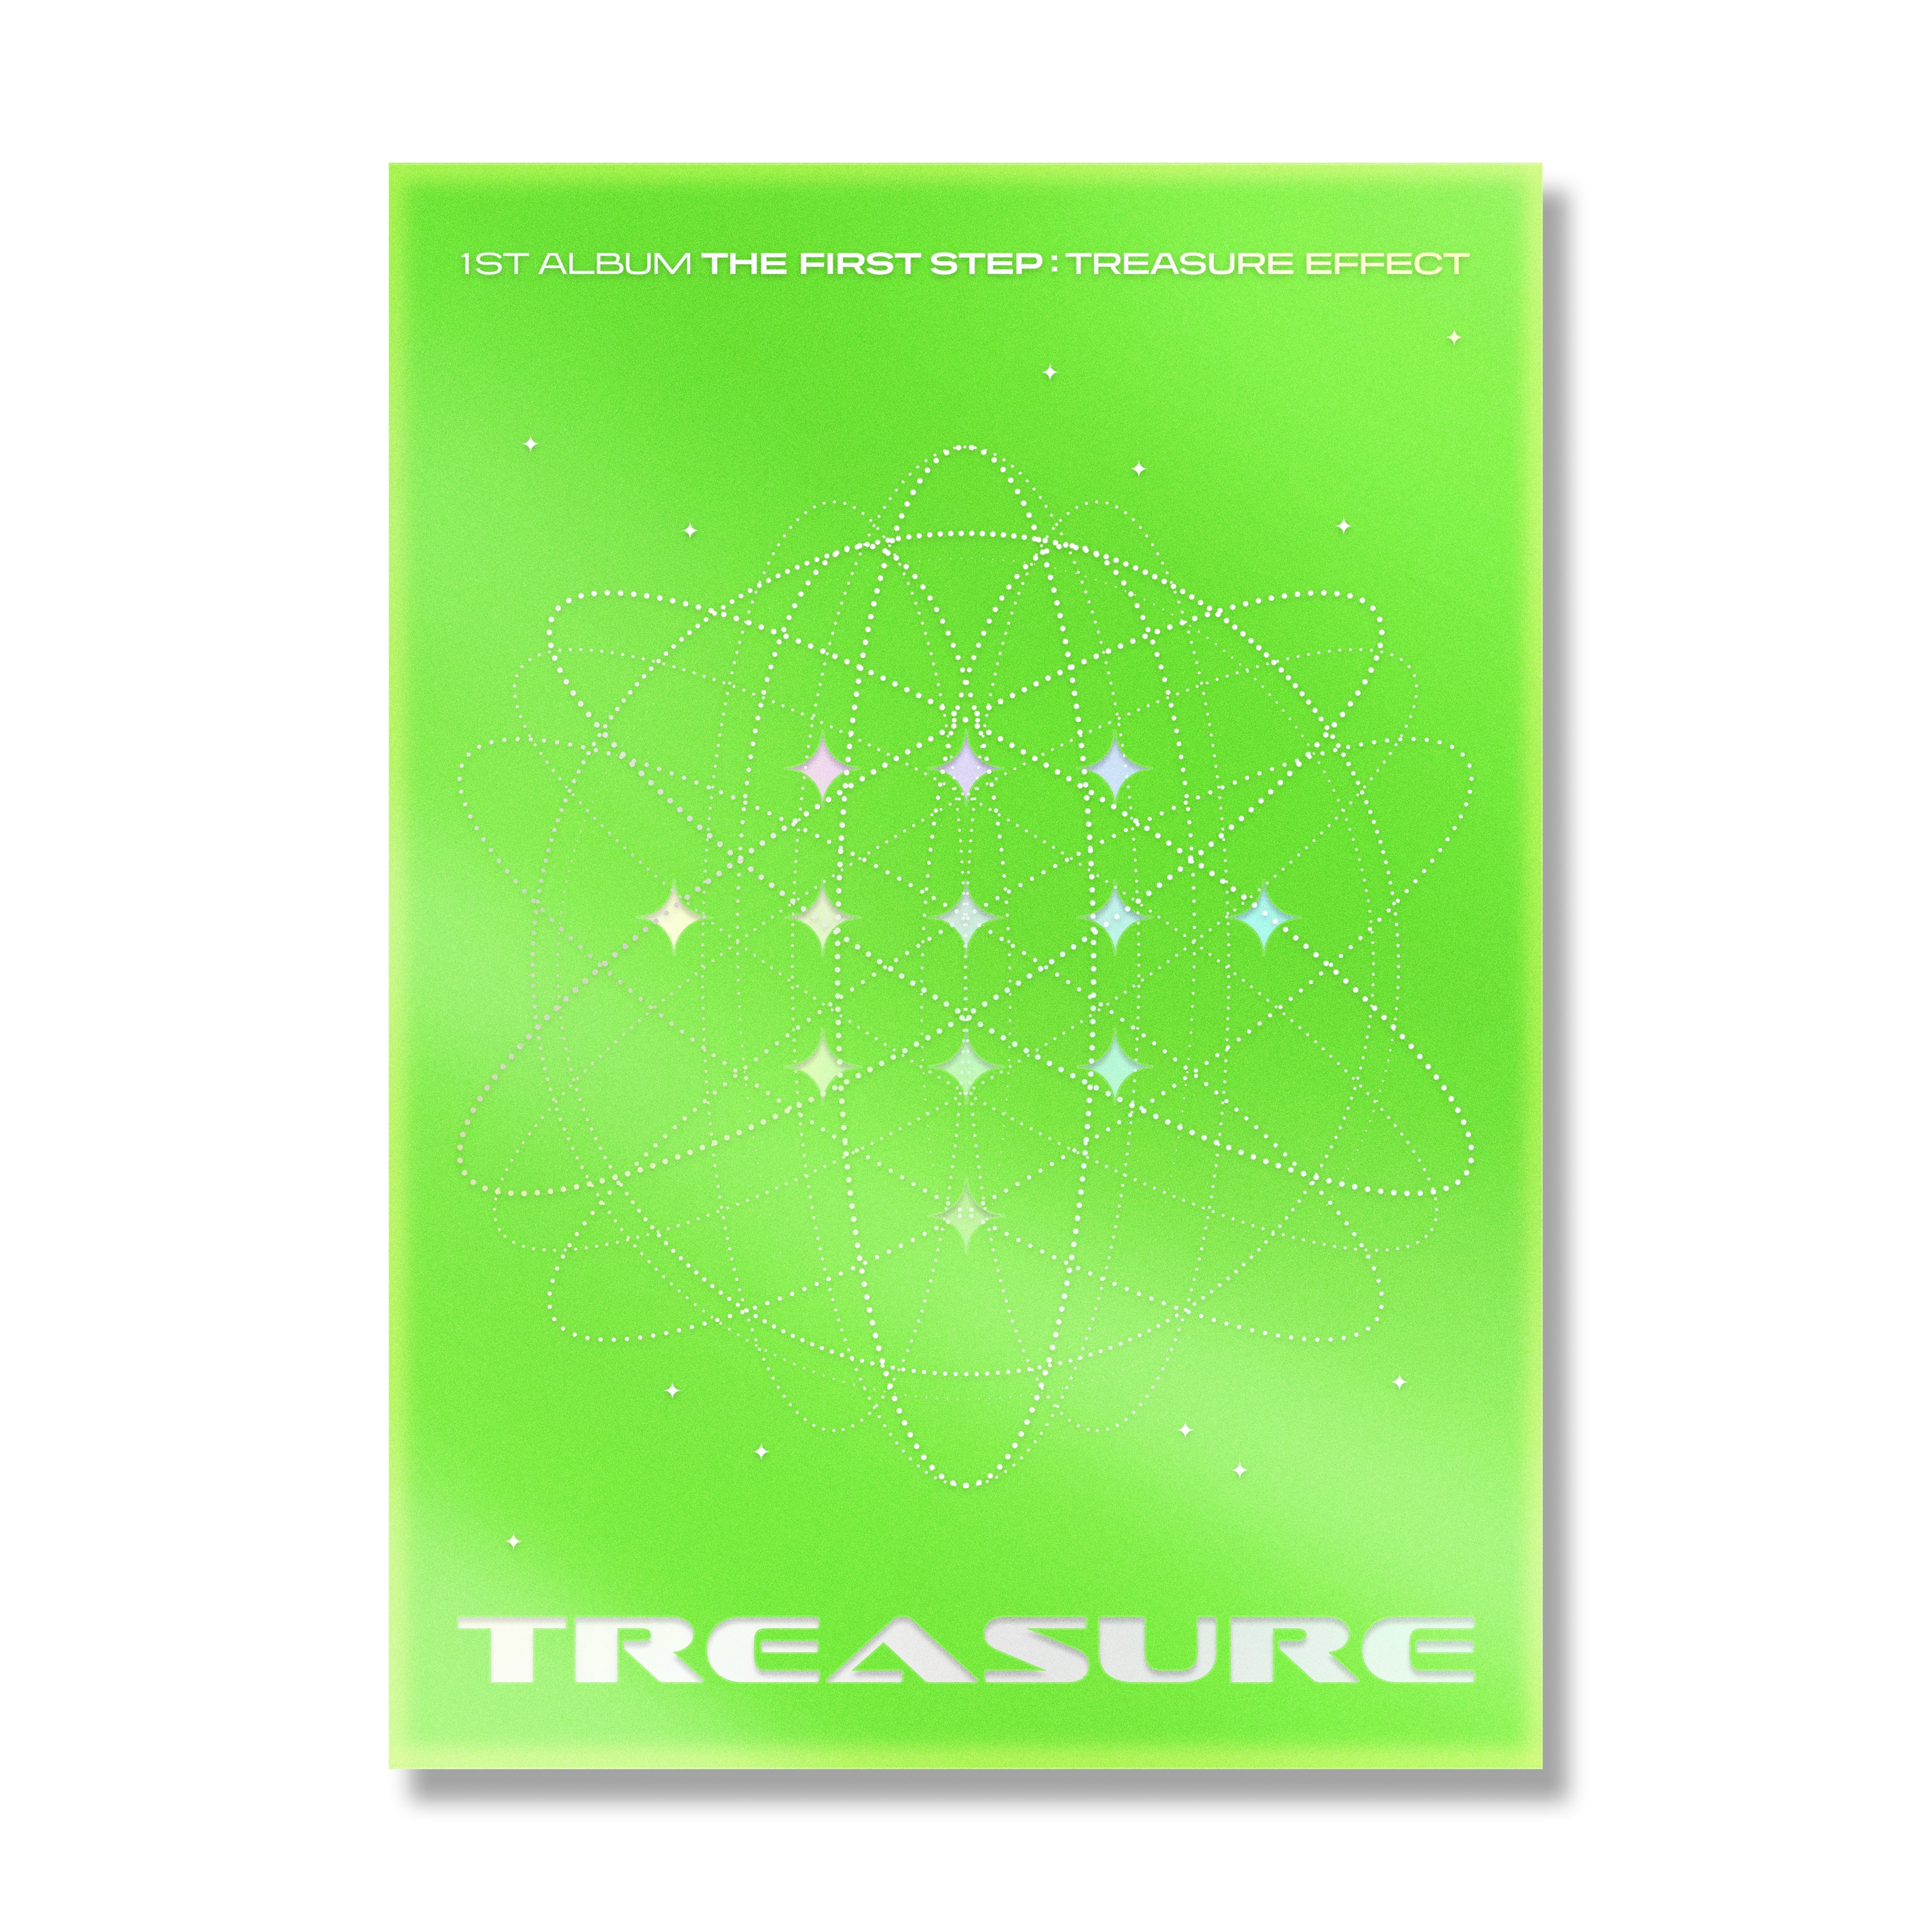 THE FIRST STEP : TREASURE EFFECT | TREASURE Wiki | Fandom